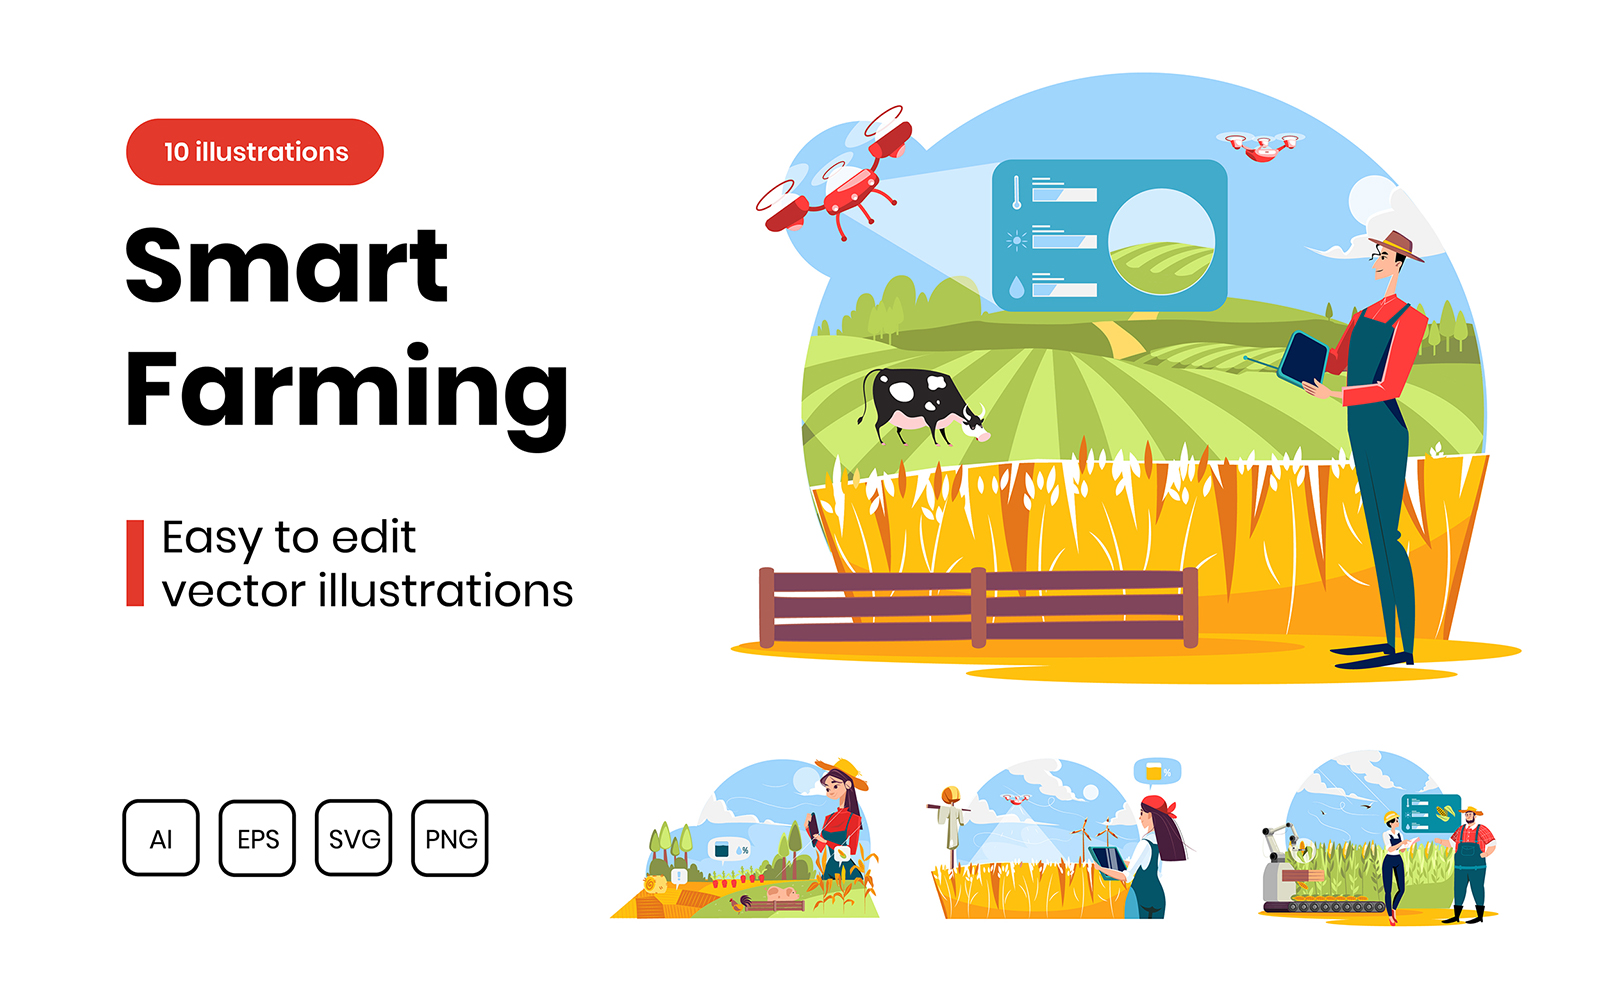 M326_Smart Farming Technology Illustrations